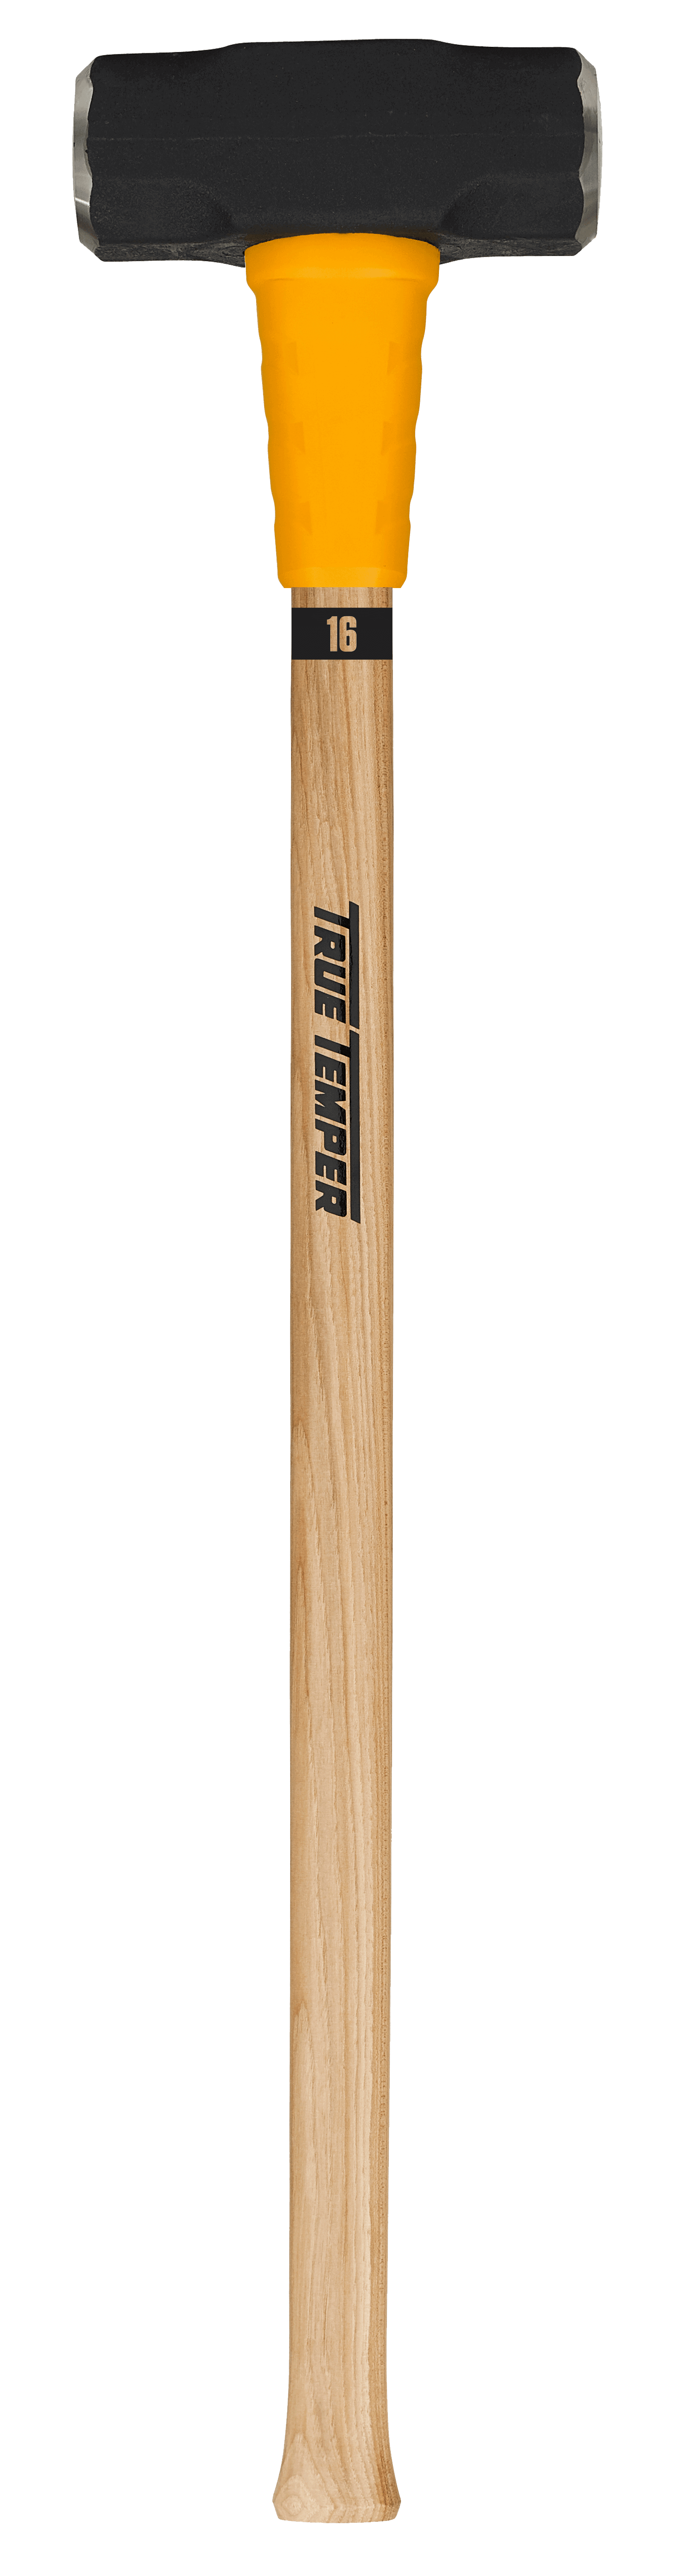 True Temper Toughstrike Sledge Hammer Wood Handled 16 Lbs 20185500